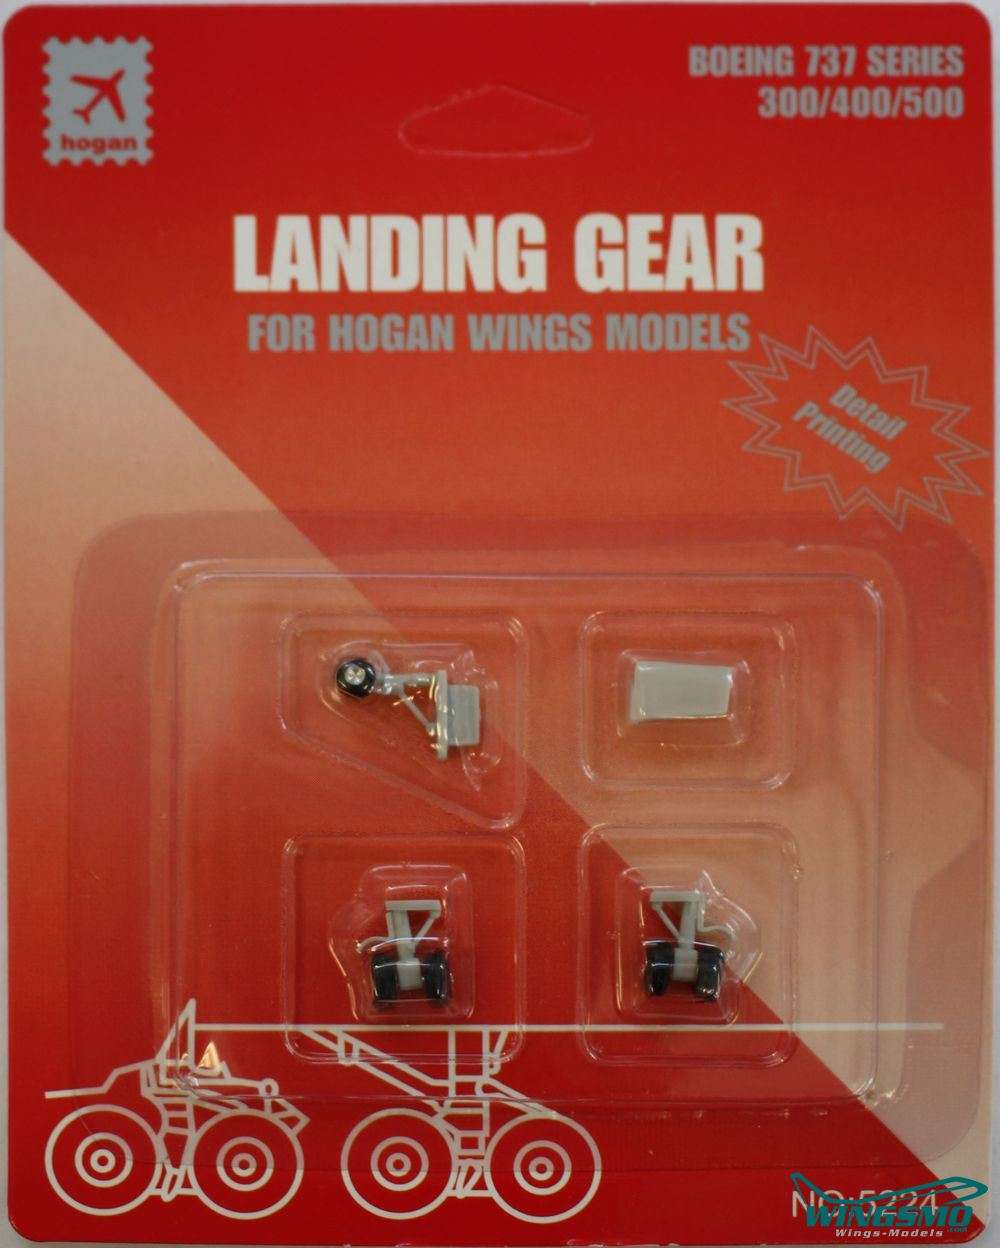 Hogan Wings Fahrwerke / Landing gears B737-300 5224R